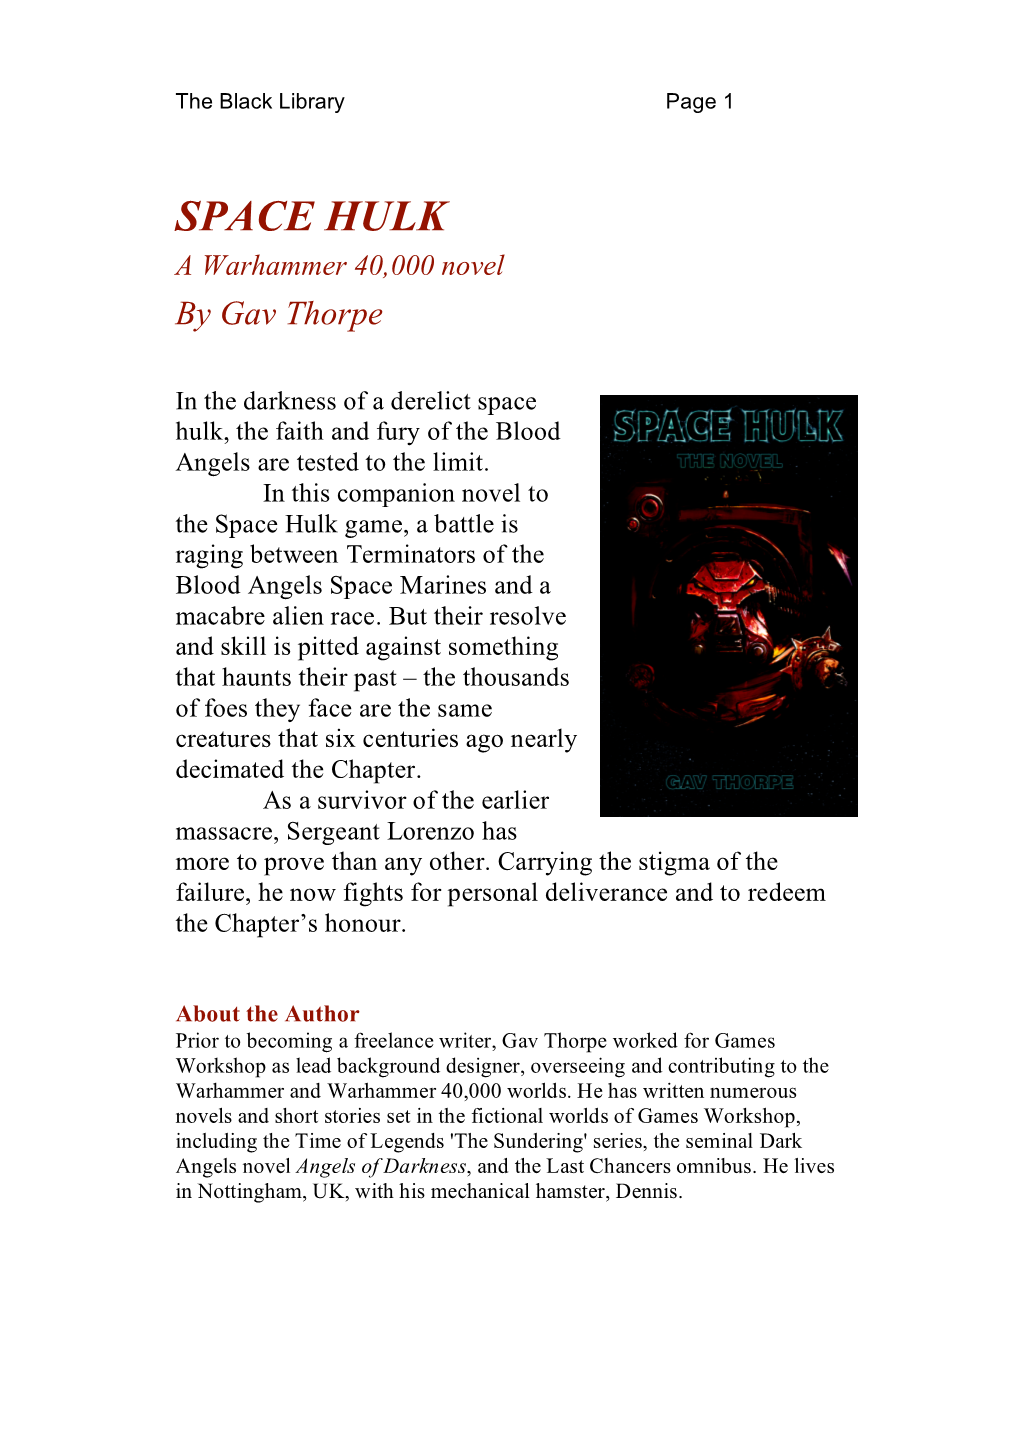 SPACE HULK a Warhammer 40,000 Novel by Gav Thorpe